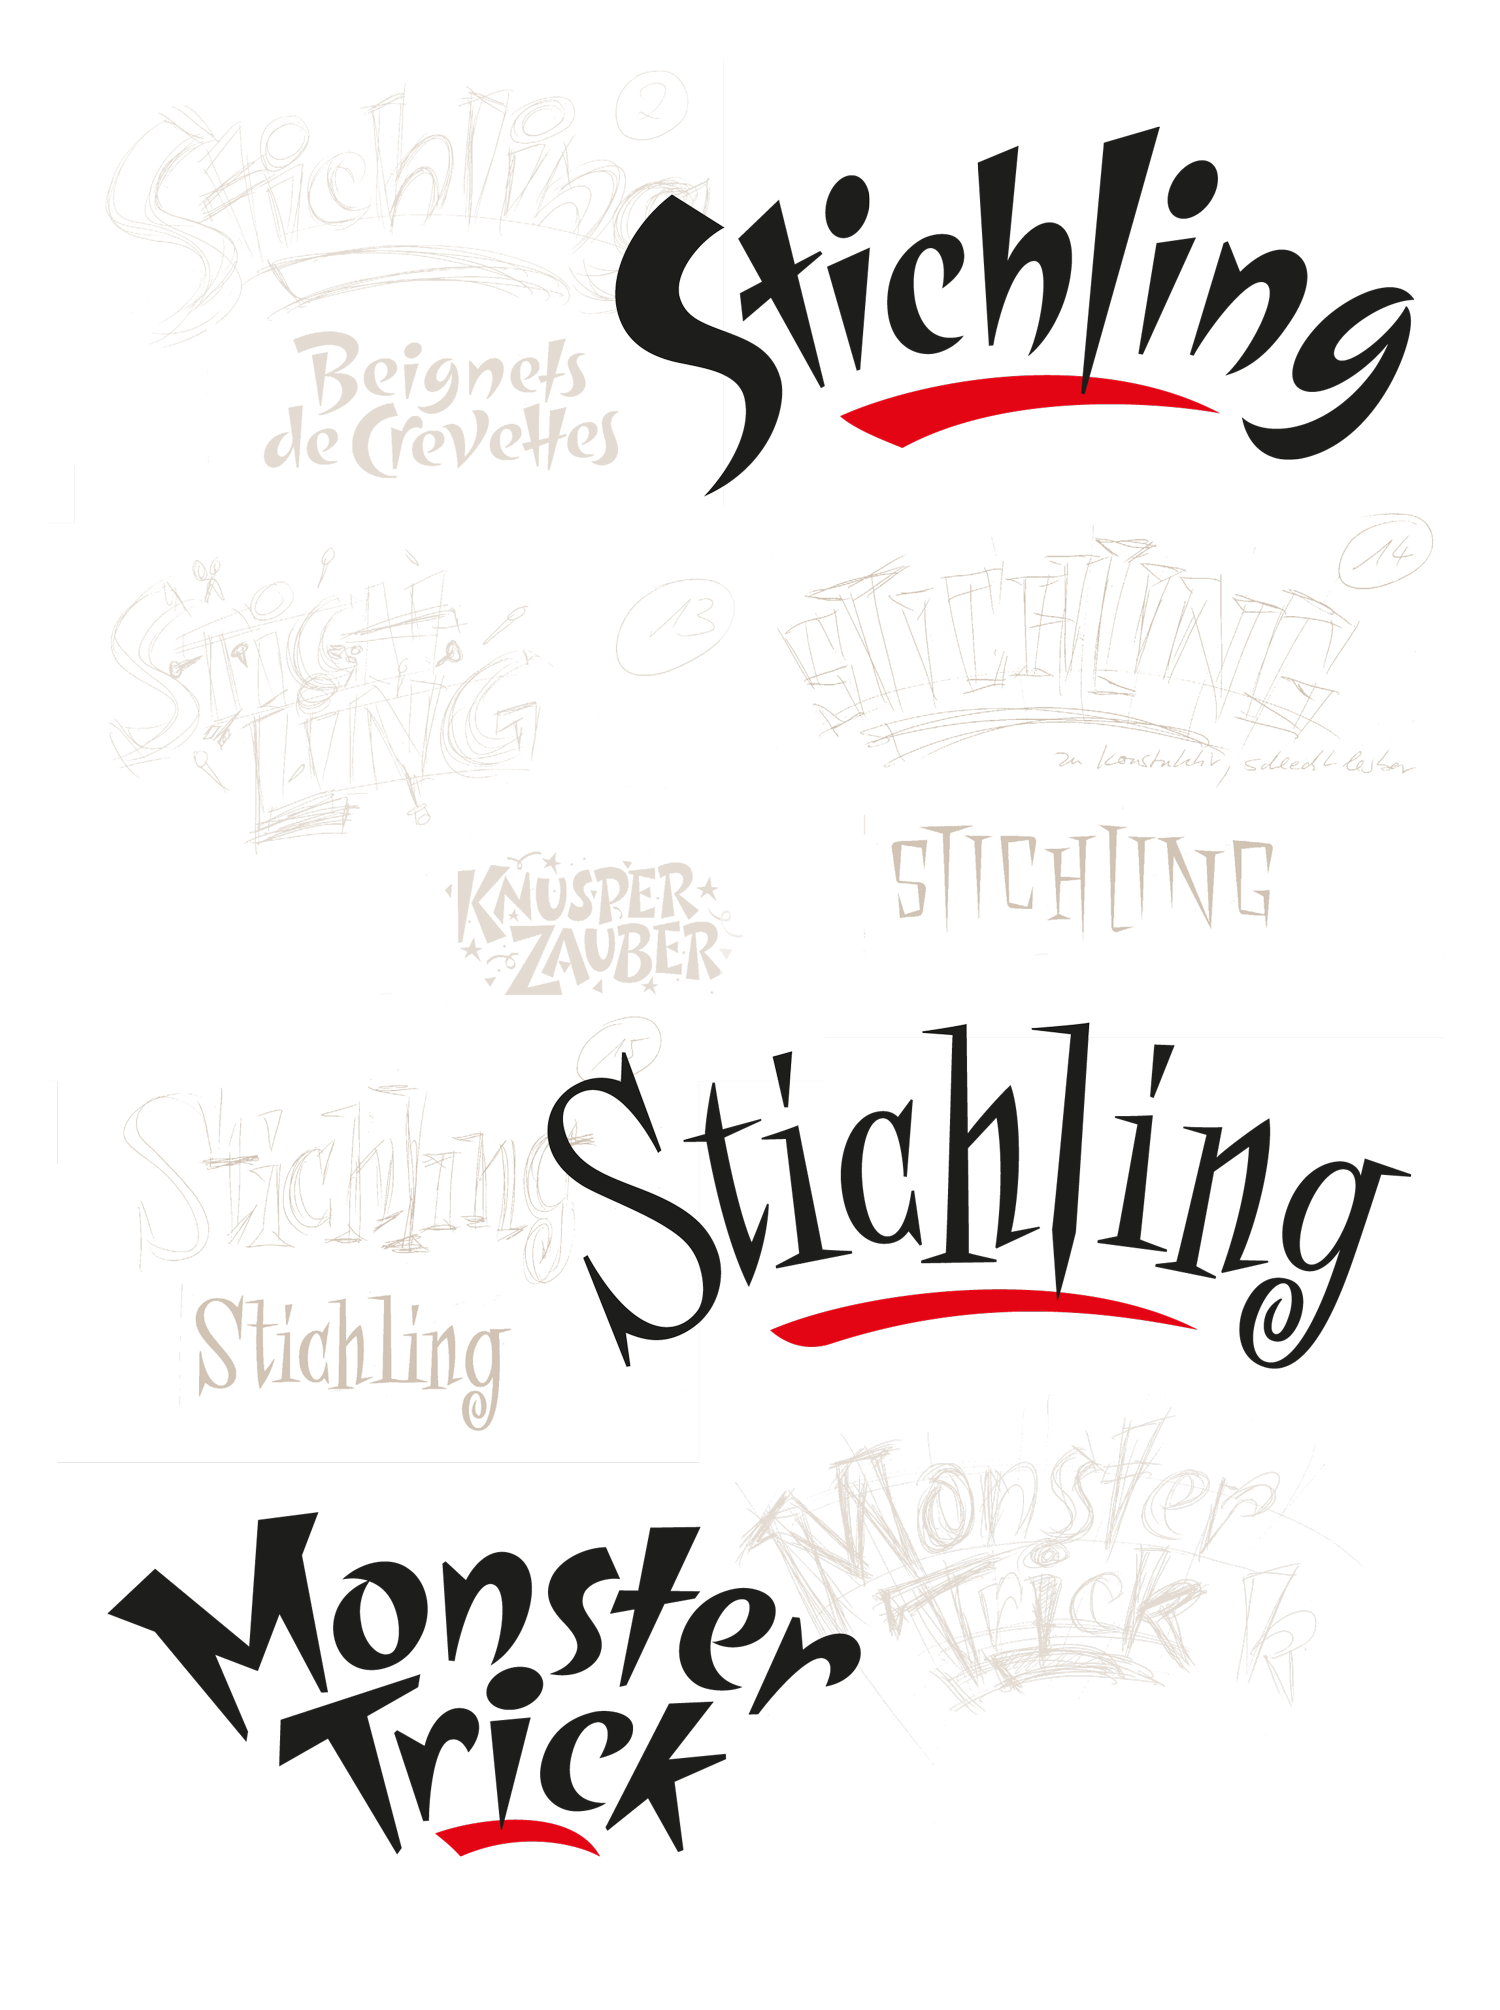 Stichling logos